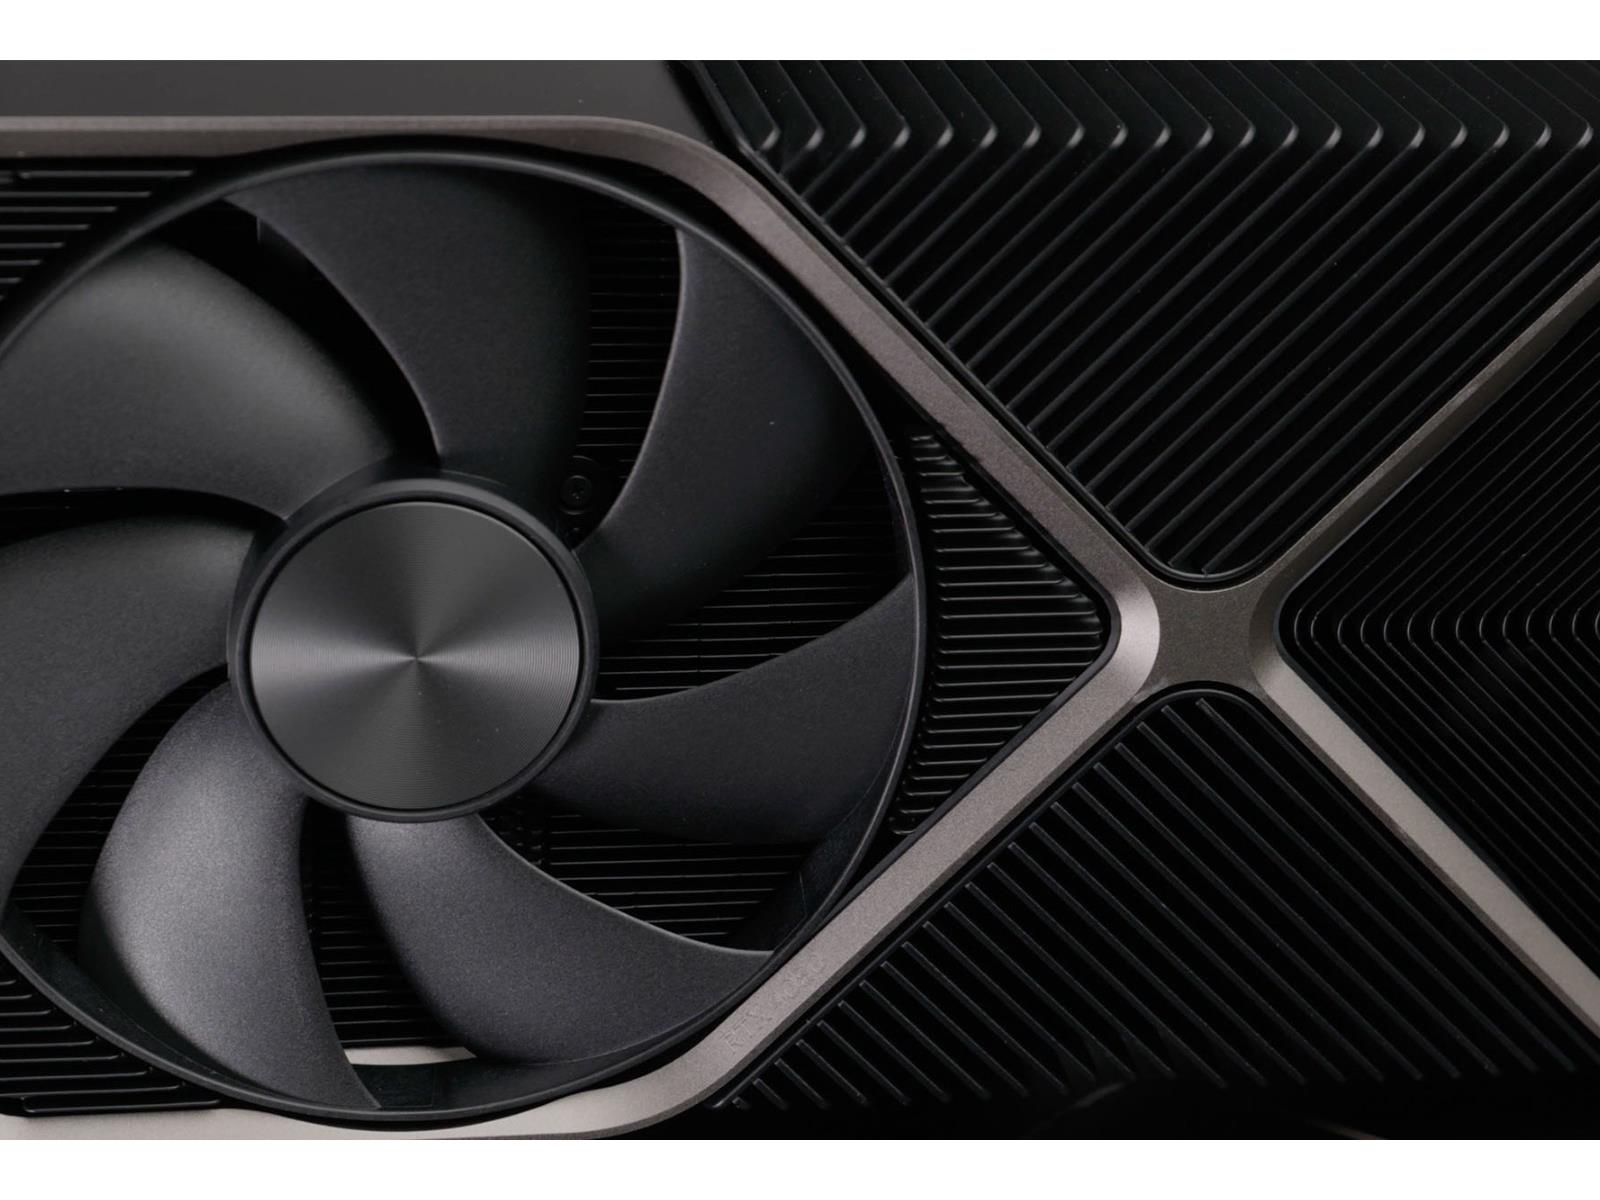 NVIDIA GeForce RTX 4080 SUPER Specs